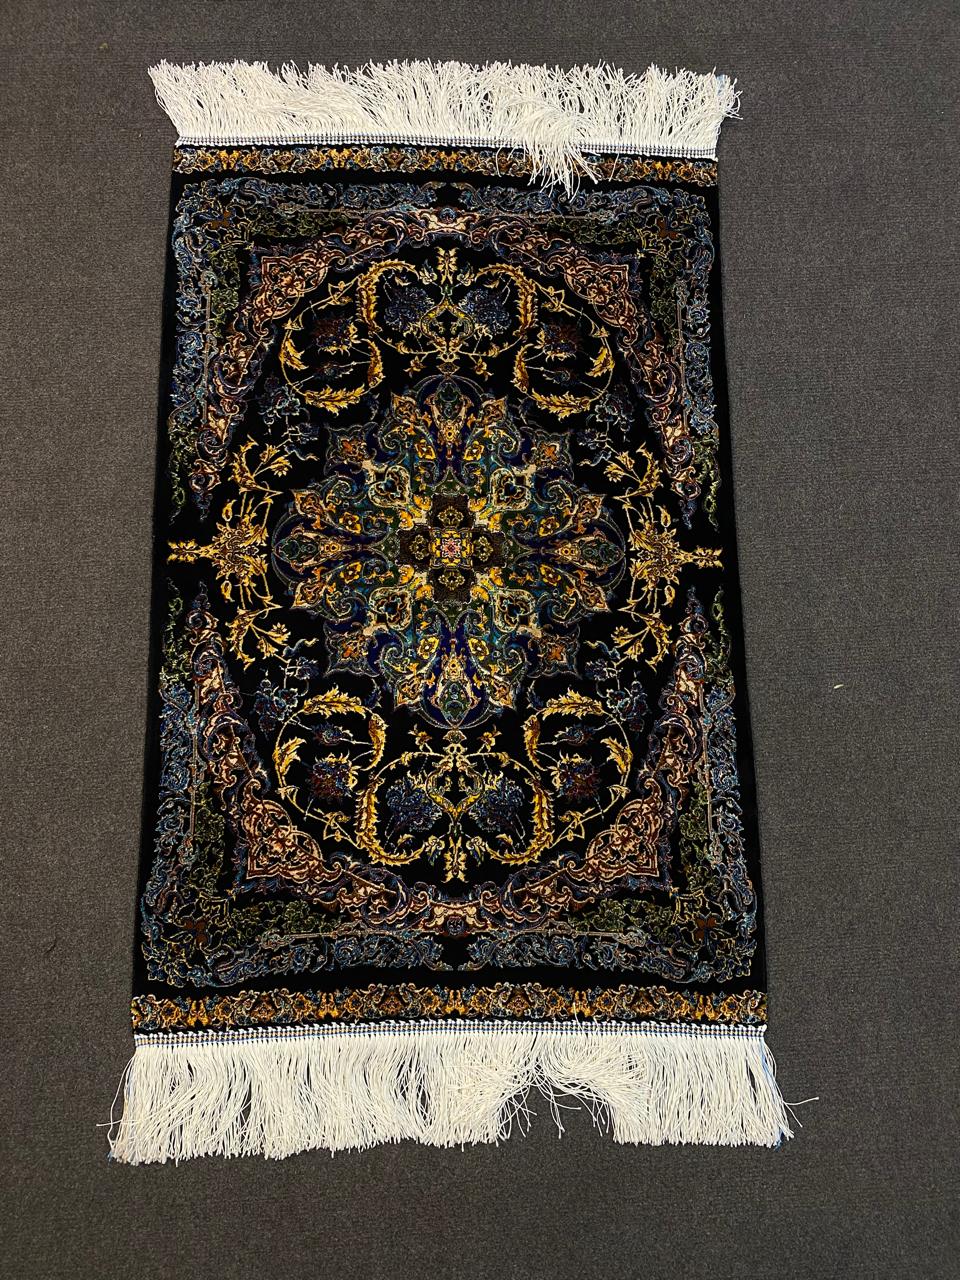 Iranian Pure Silk Carpets. 2x3ft.